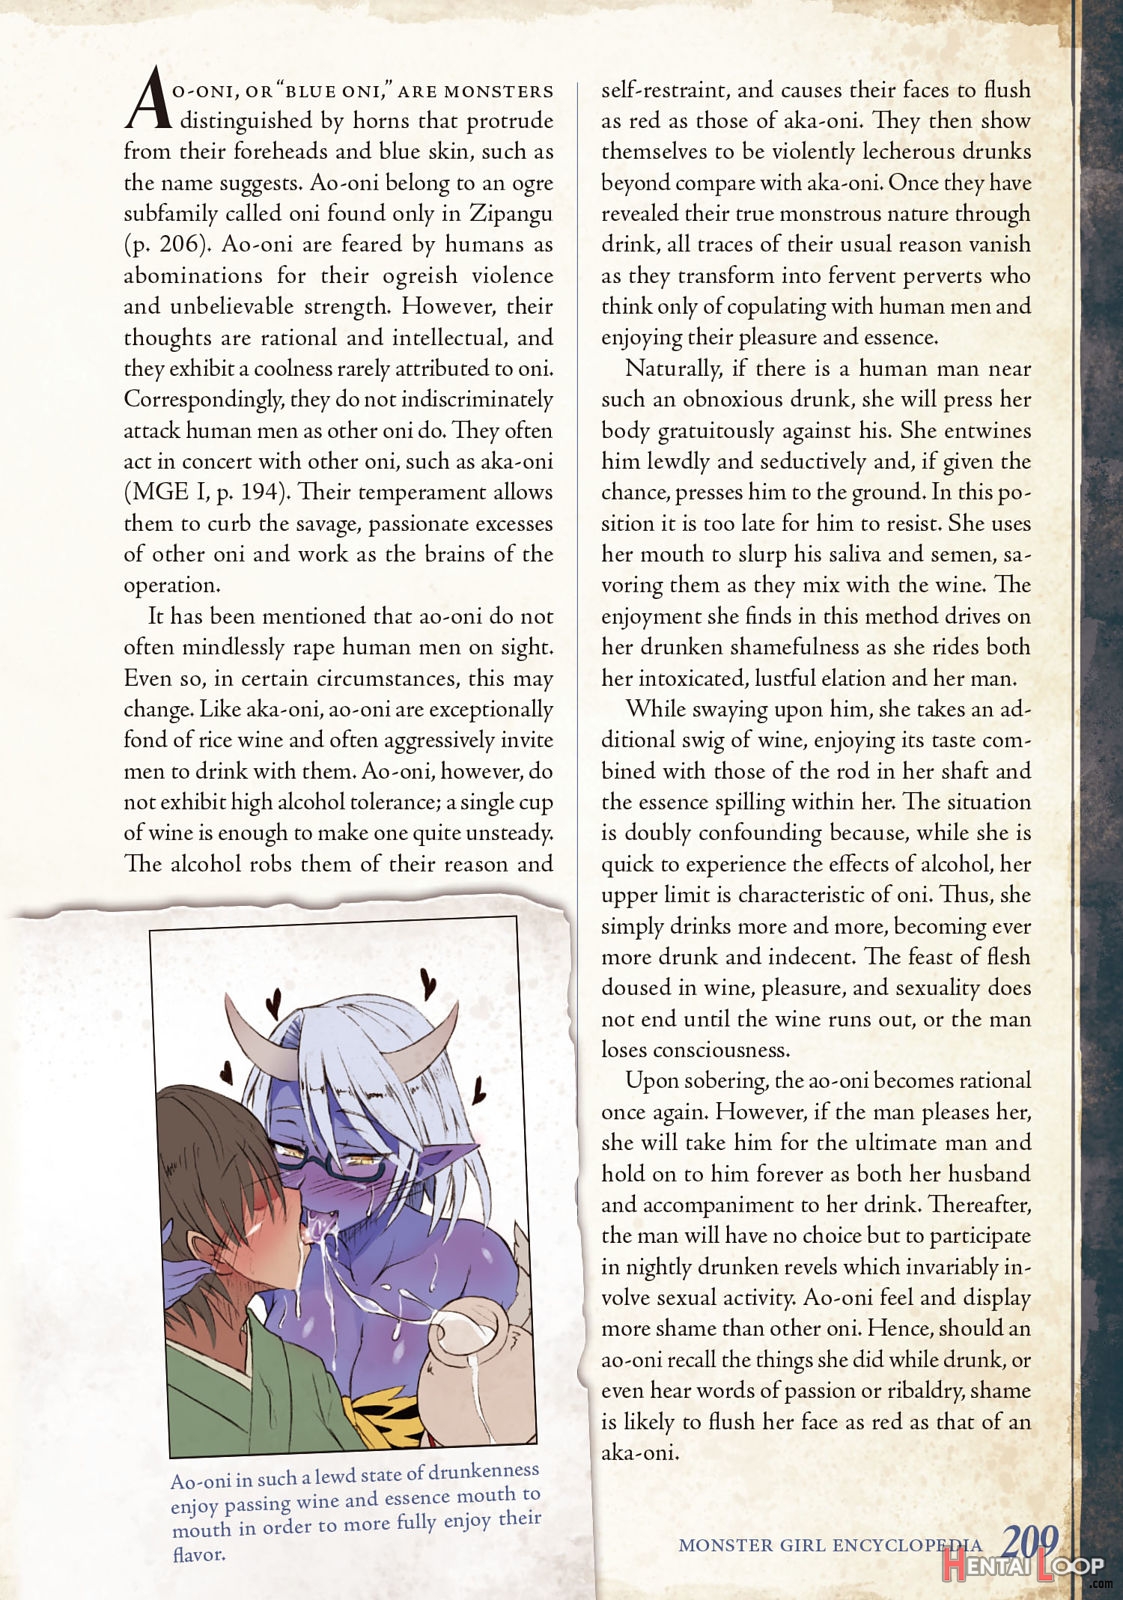 Monster Girl Encyclopedia Vol. 2 page 210